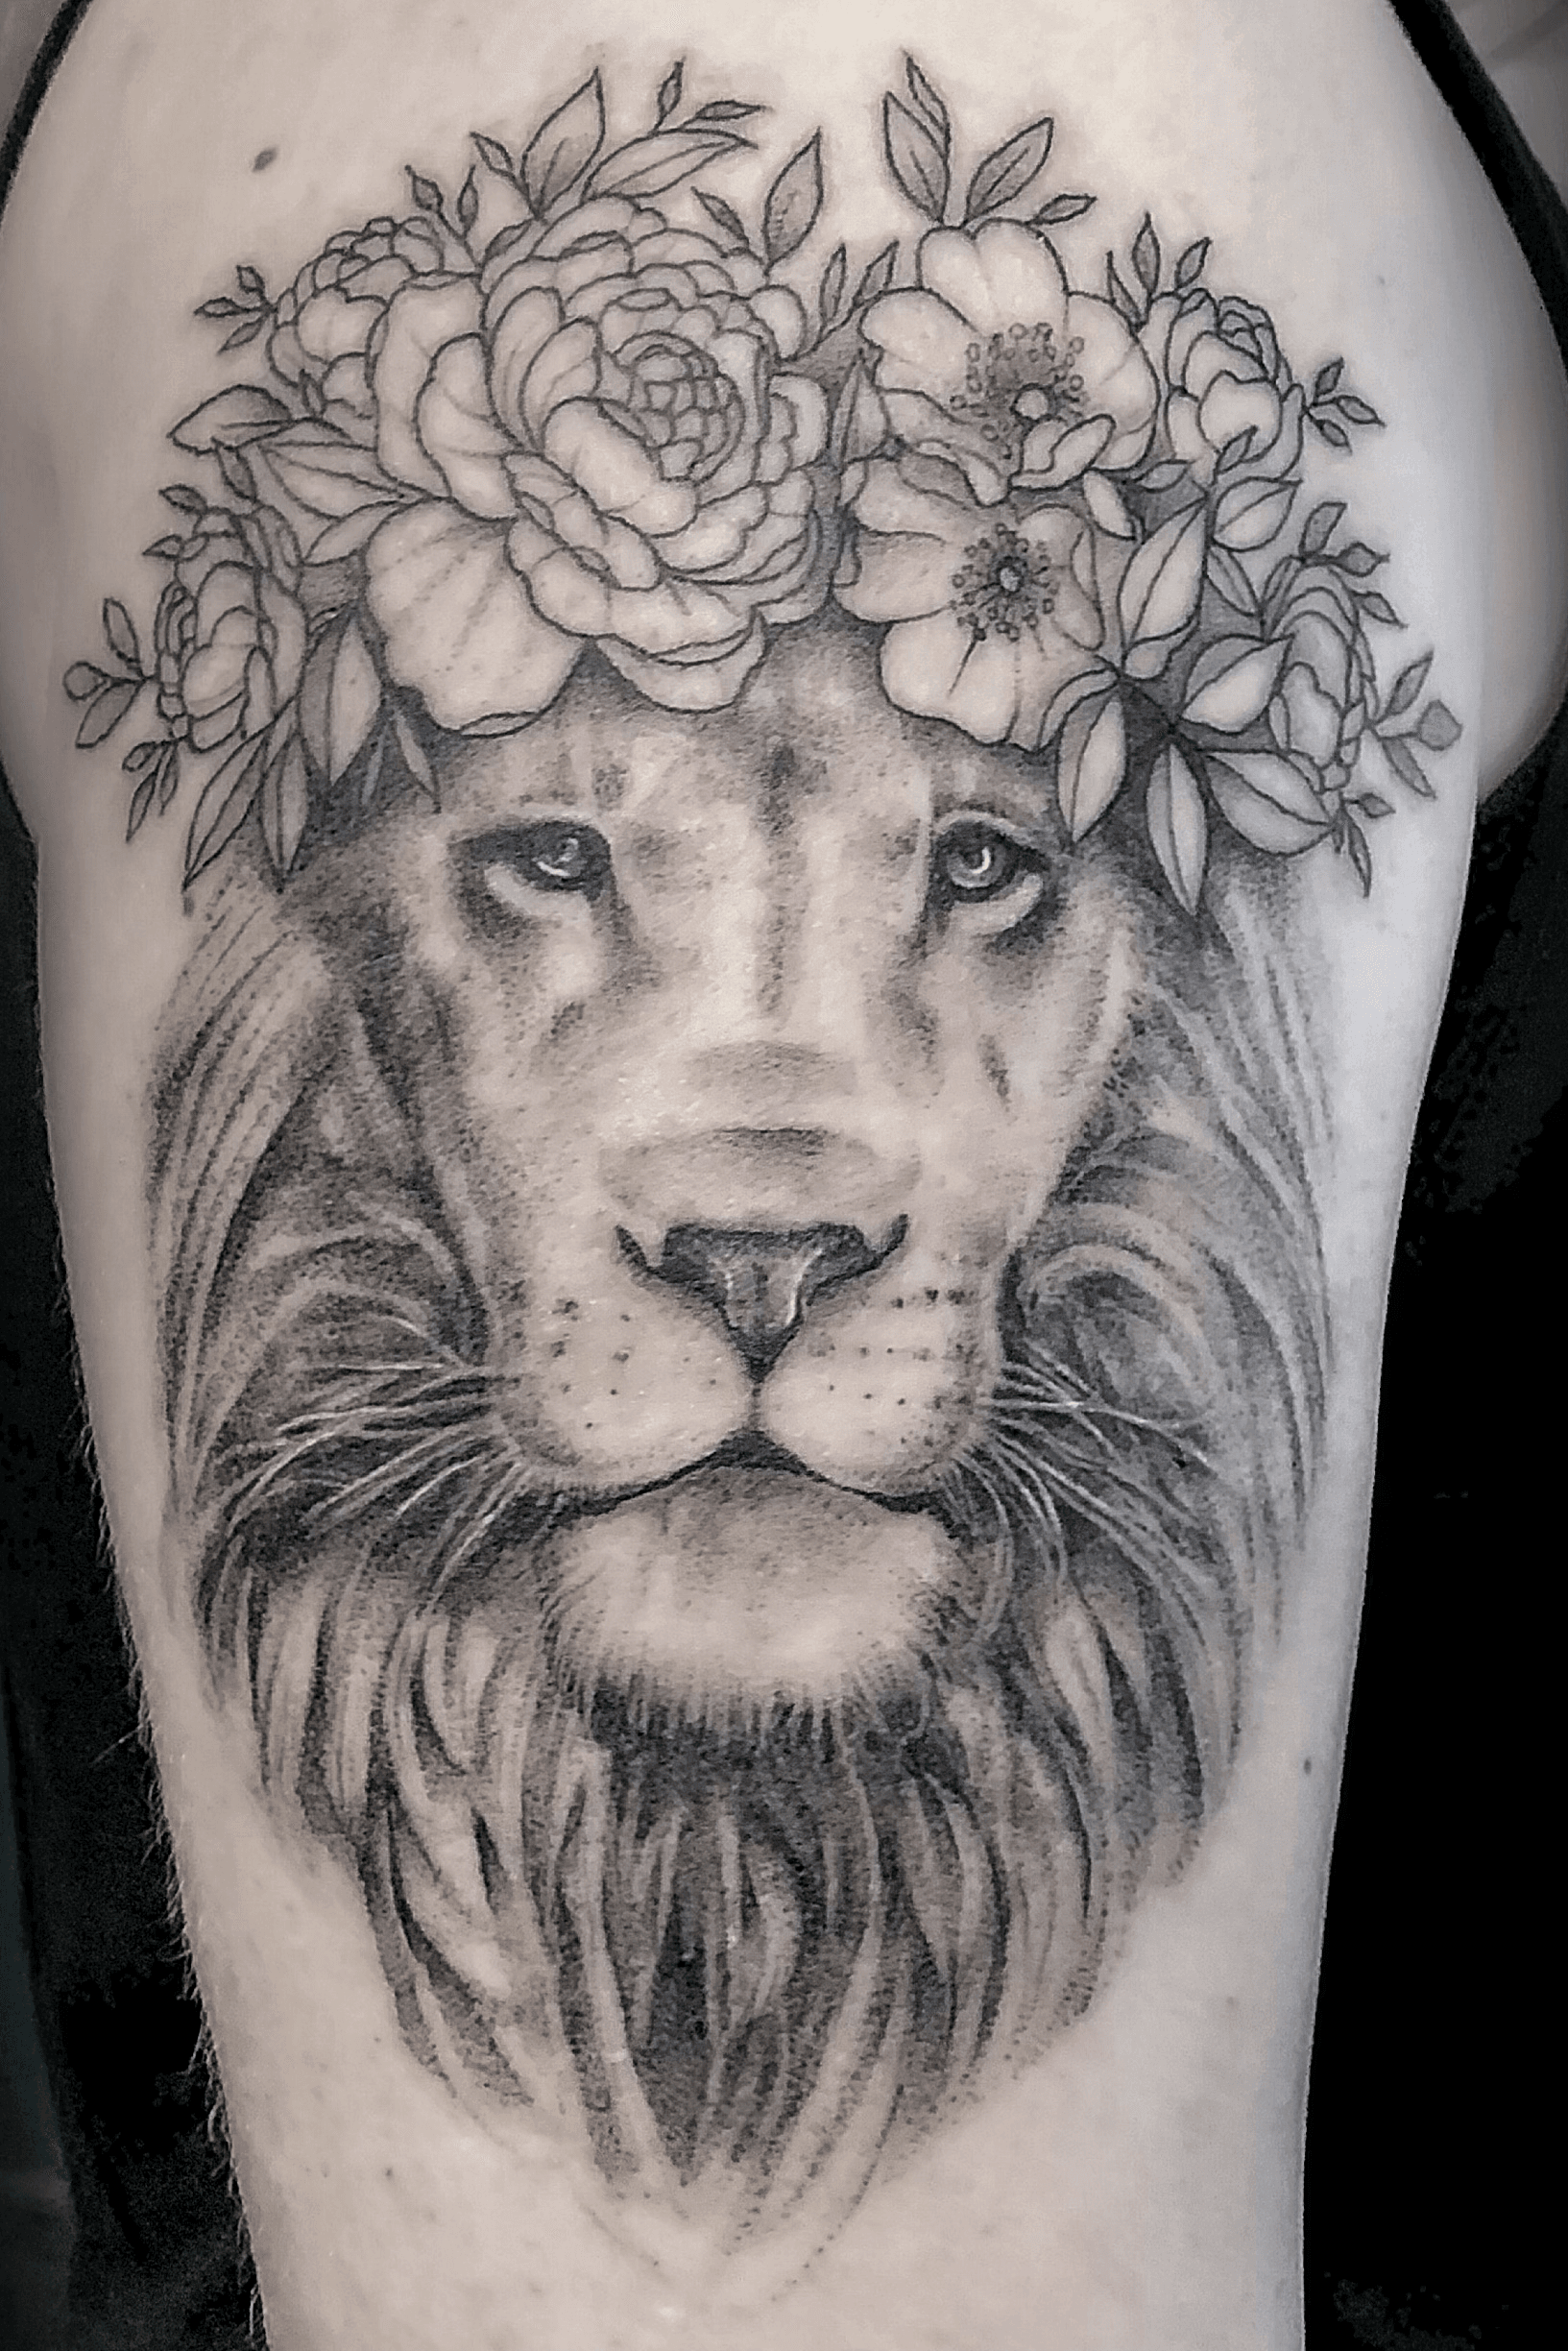 2059 Tattoo Lion Flowers Images Stock Photos  Vectors  Shutterstock